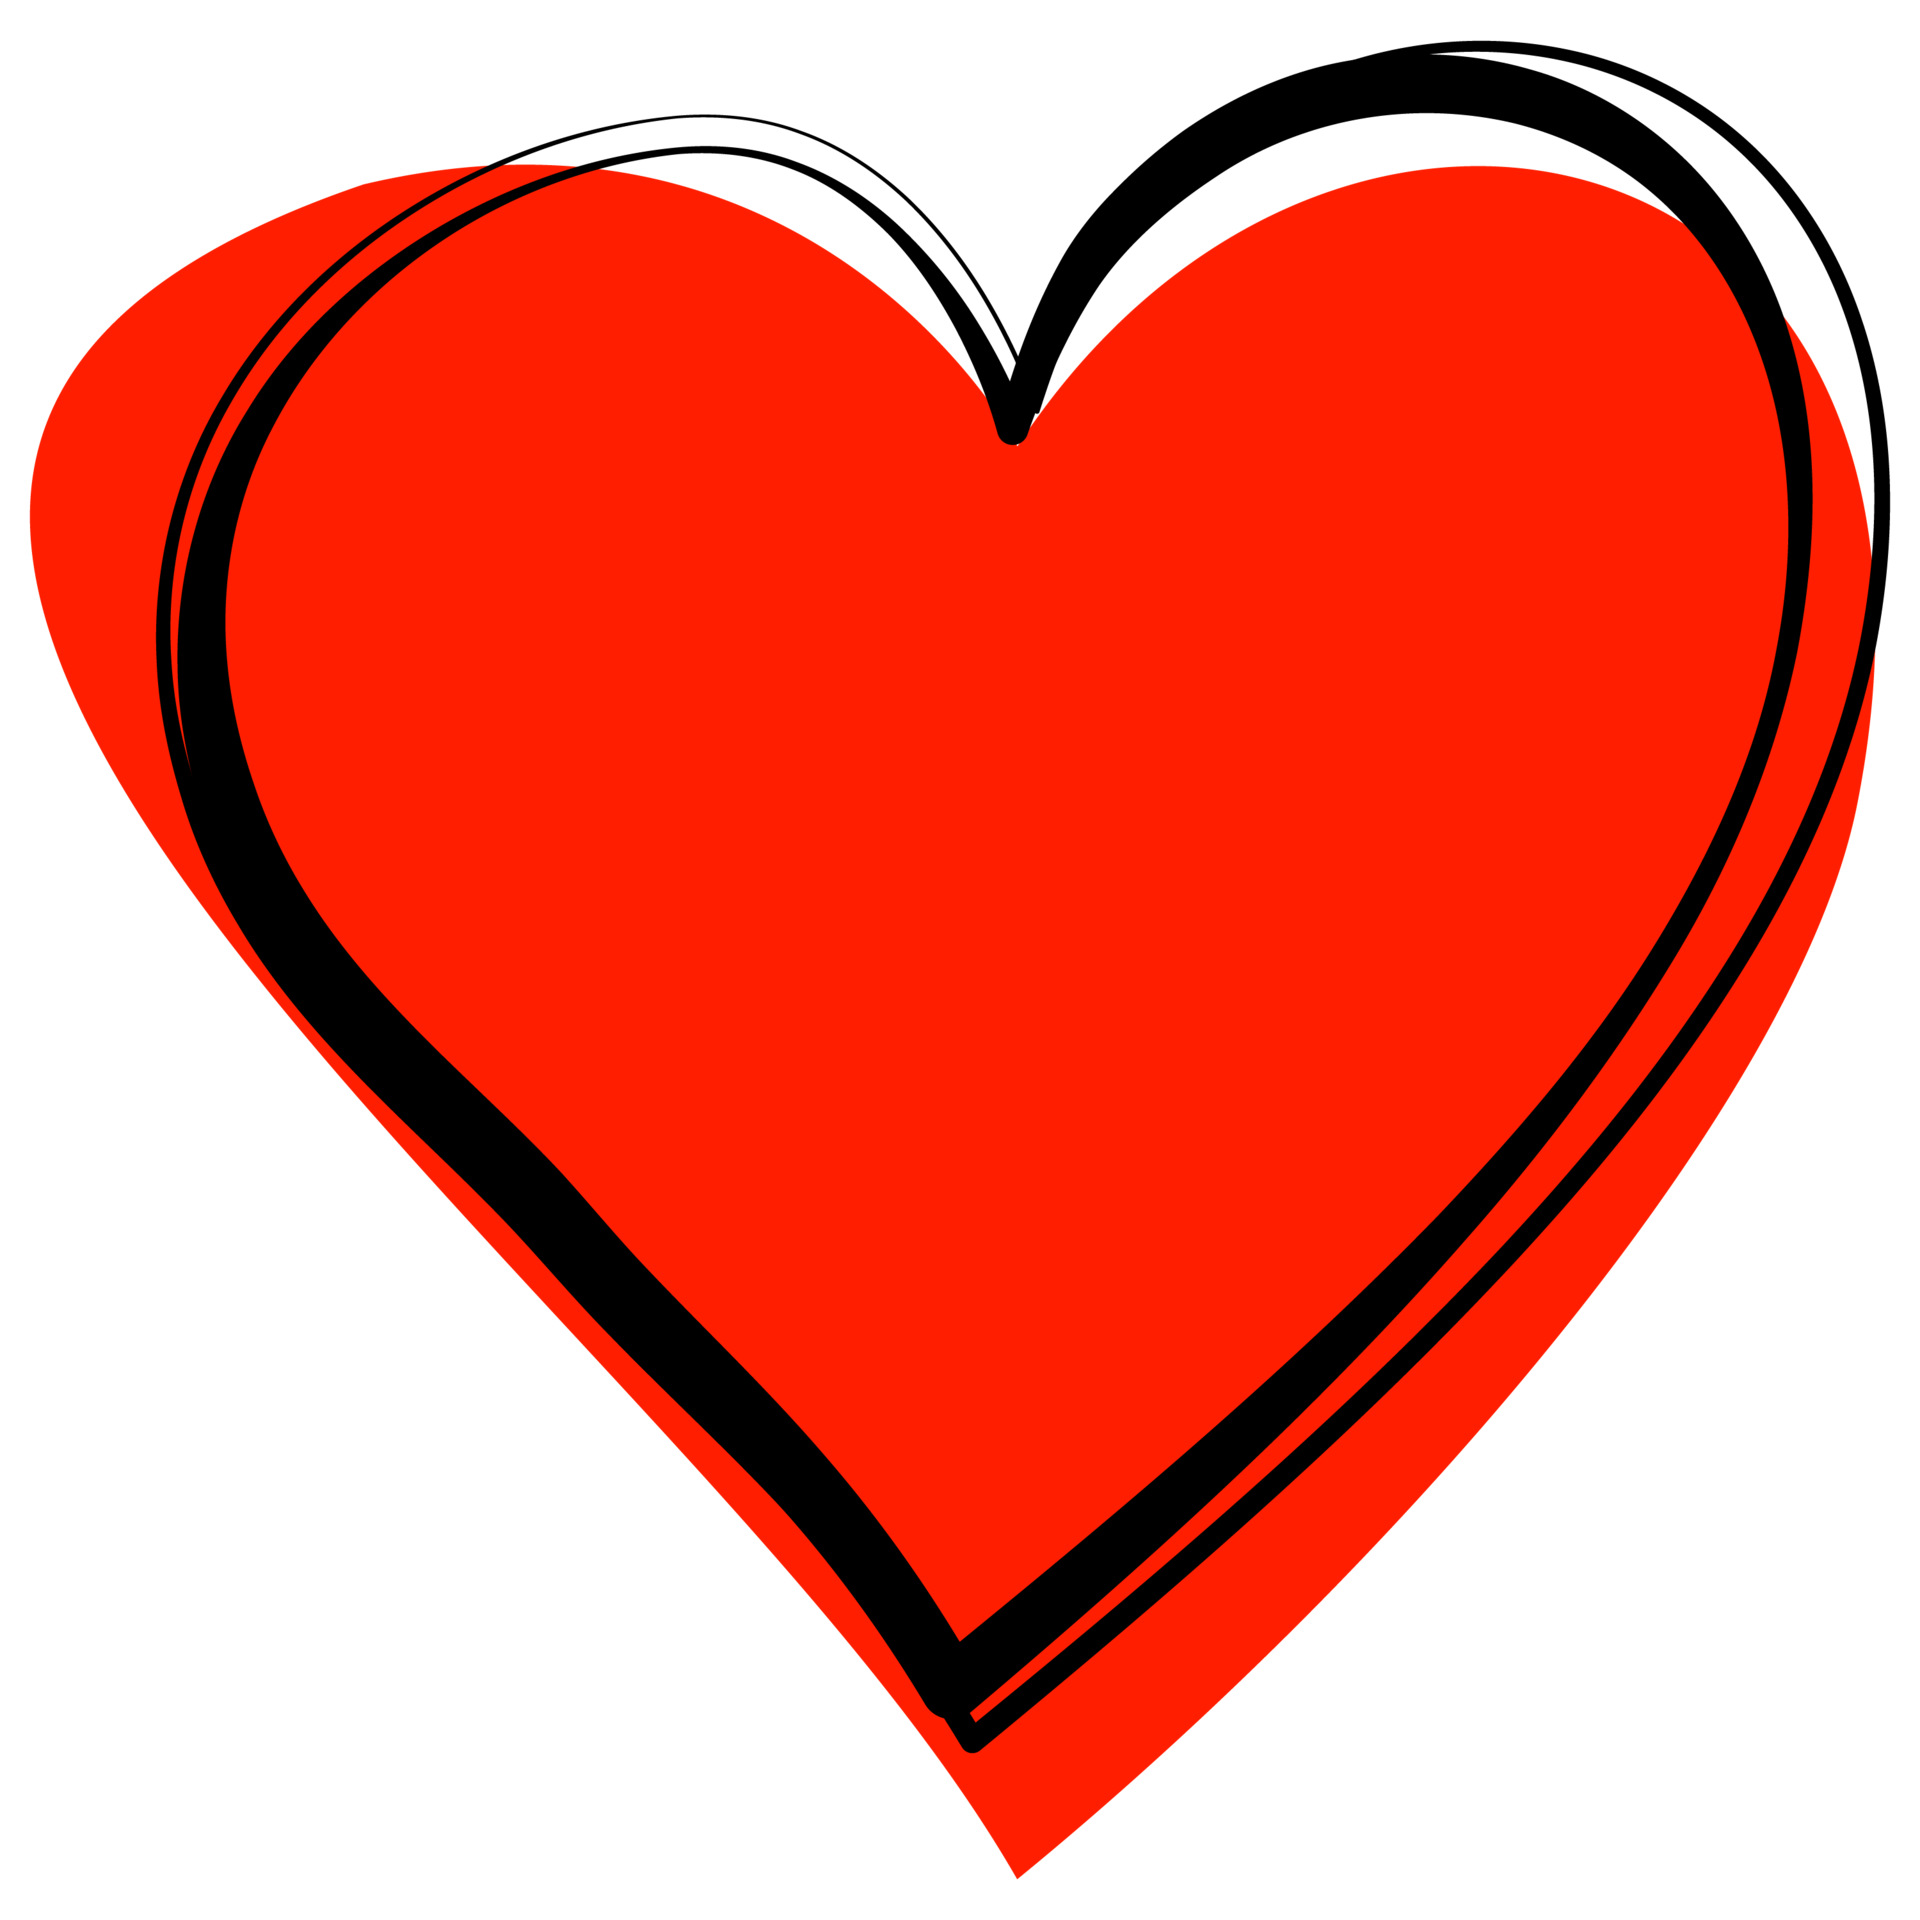 Red heart clipart, Valentine's illustration